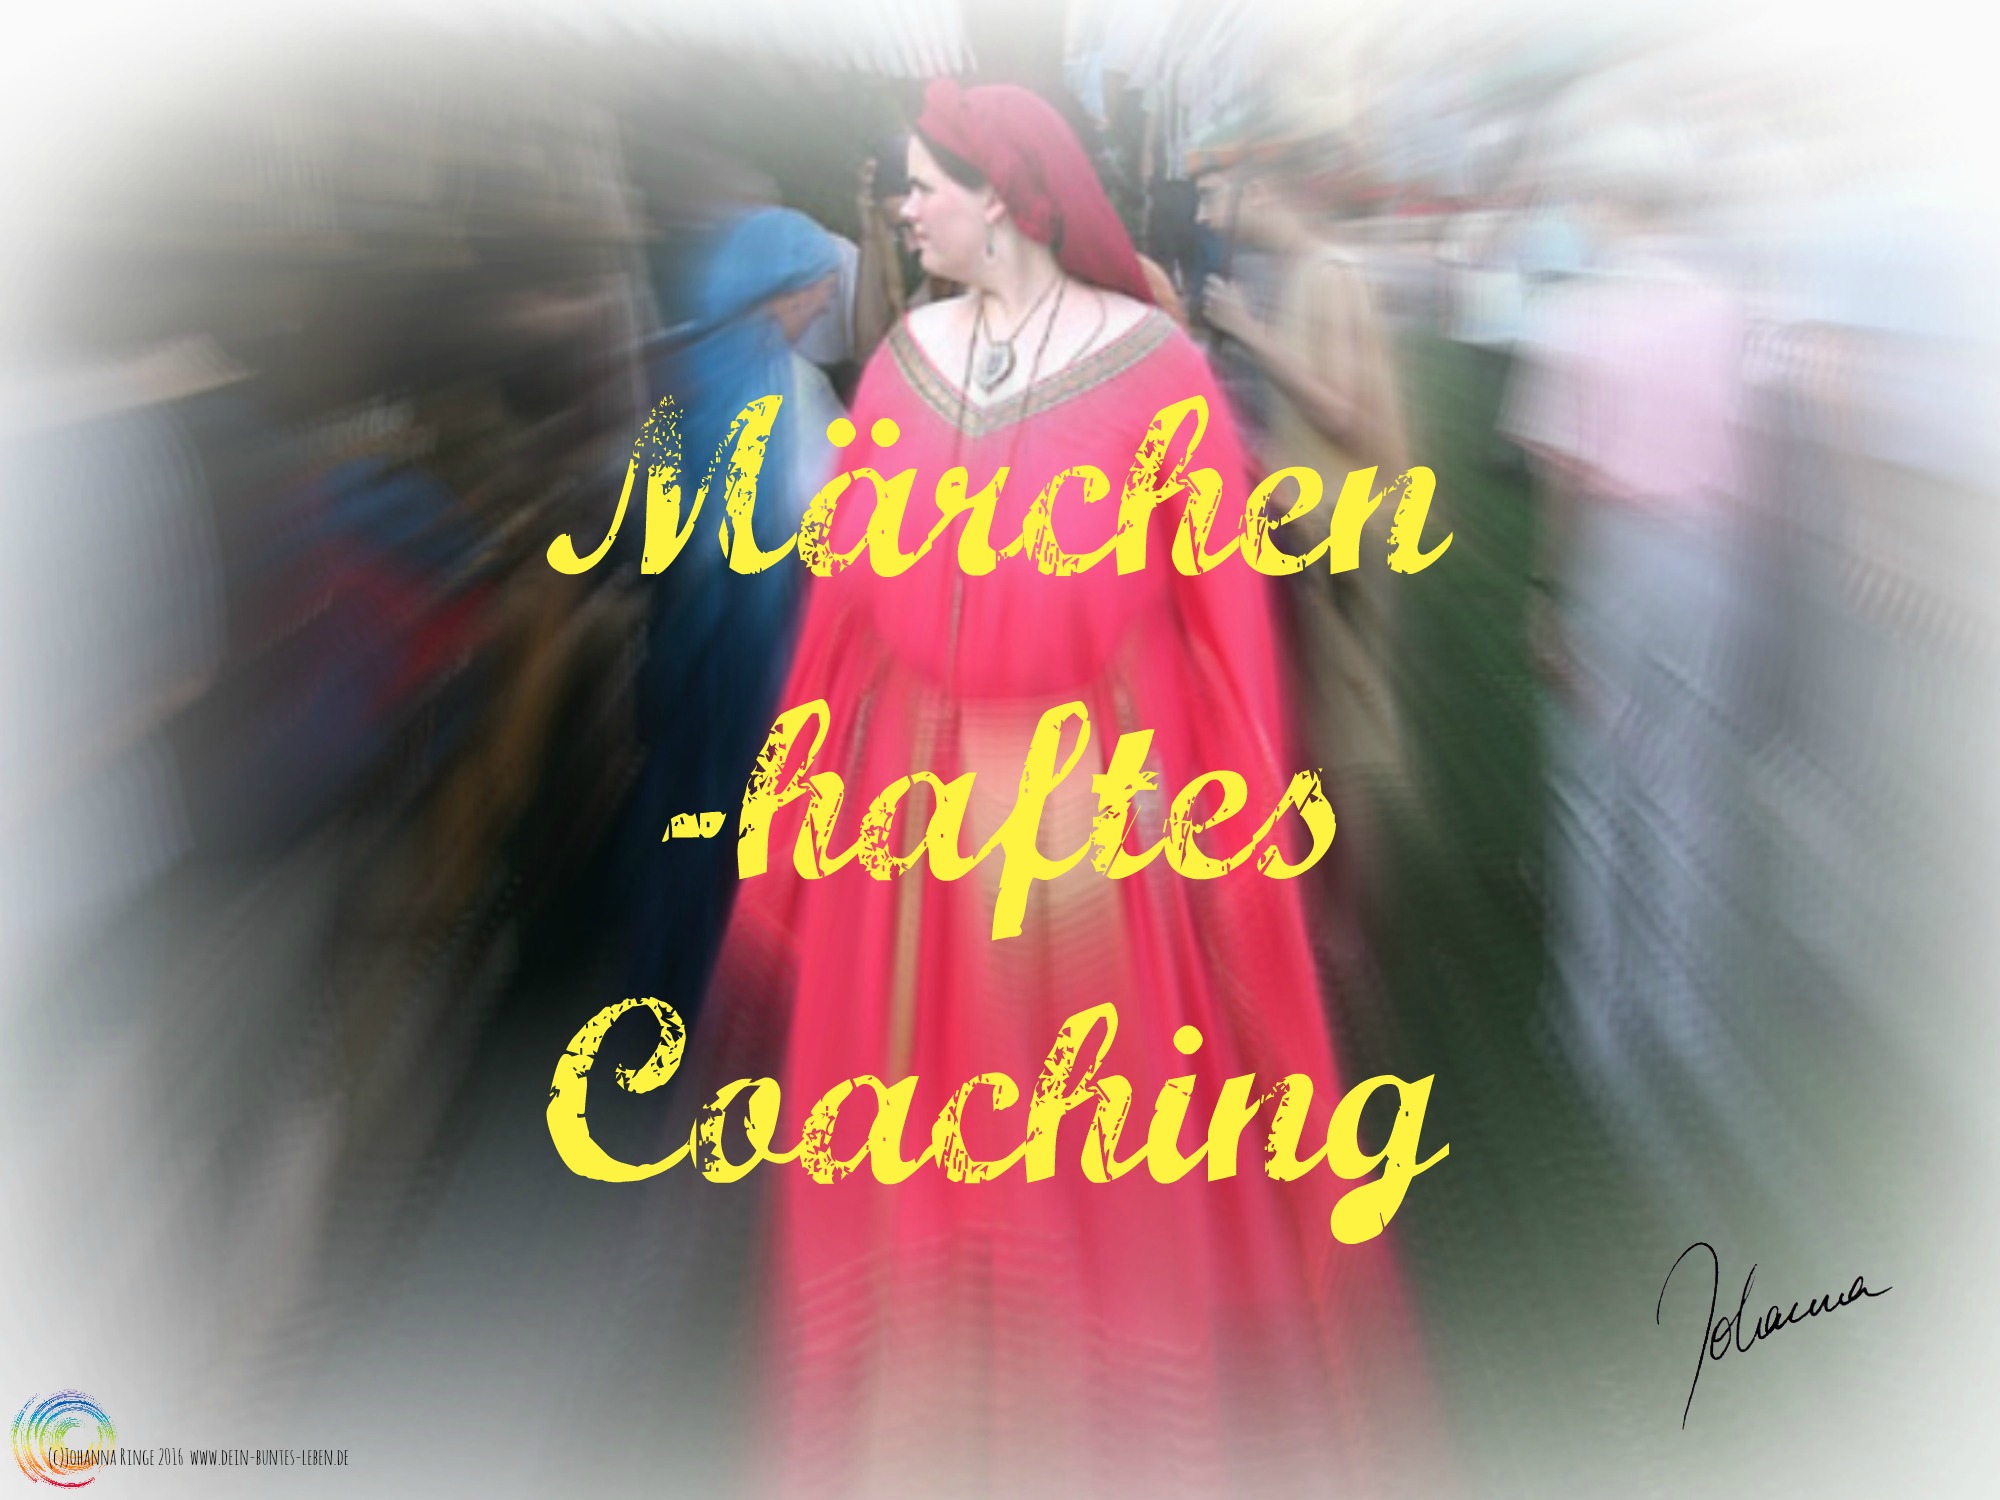 Märchen -haftes Coaching (c)Johanna Ringe www.dein-buntes-leben.de www.johanna-ringe.coach